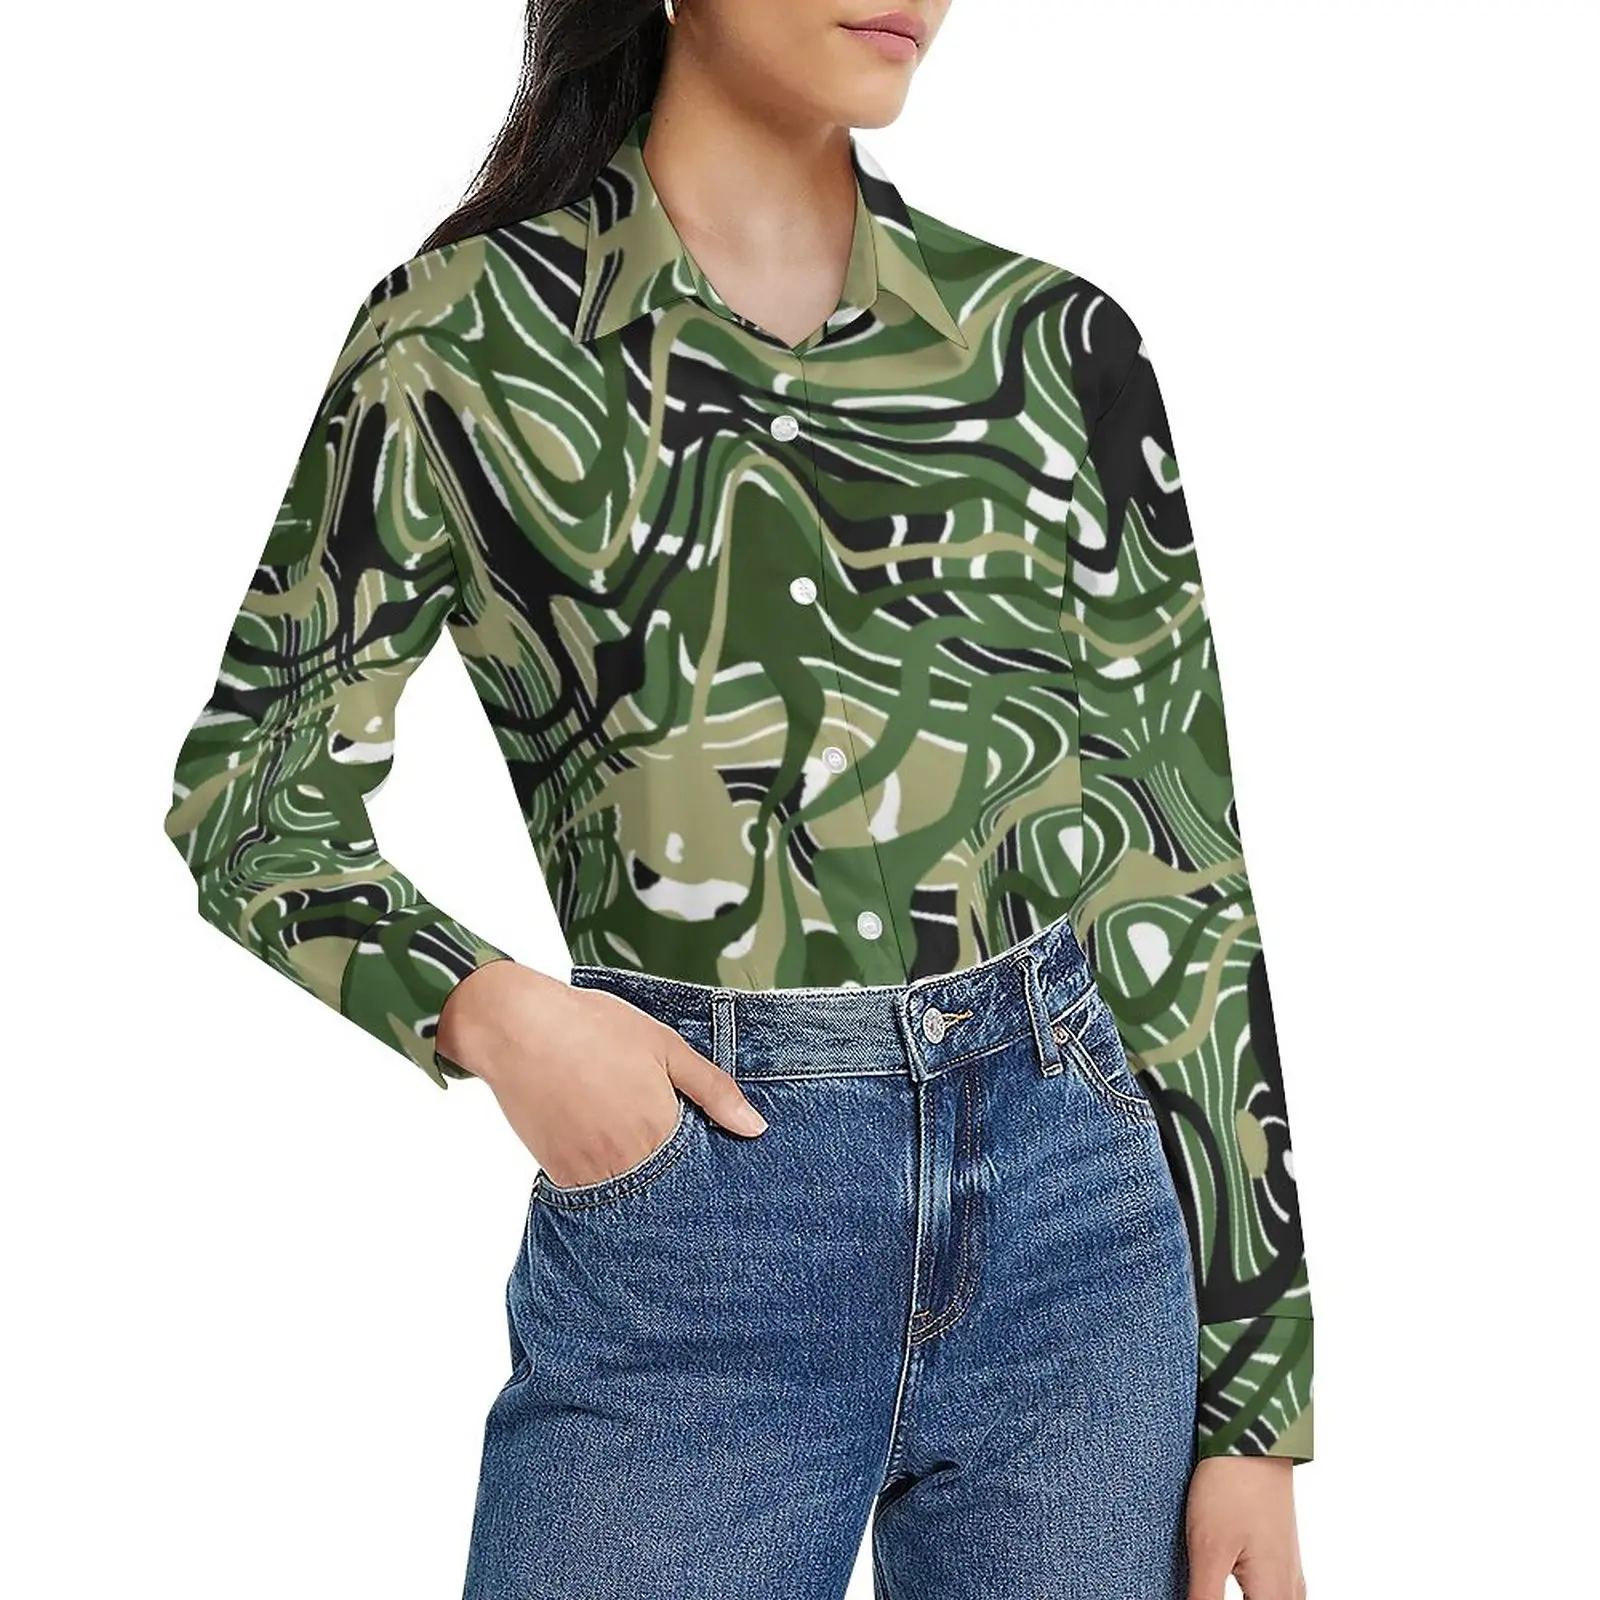 

Abstract Print Blouse Camo-like Liquid Cool Printed Blouses Woman Long Sleeve Street Wear Shirt Summer Oversize Top